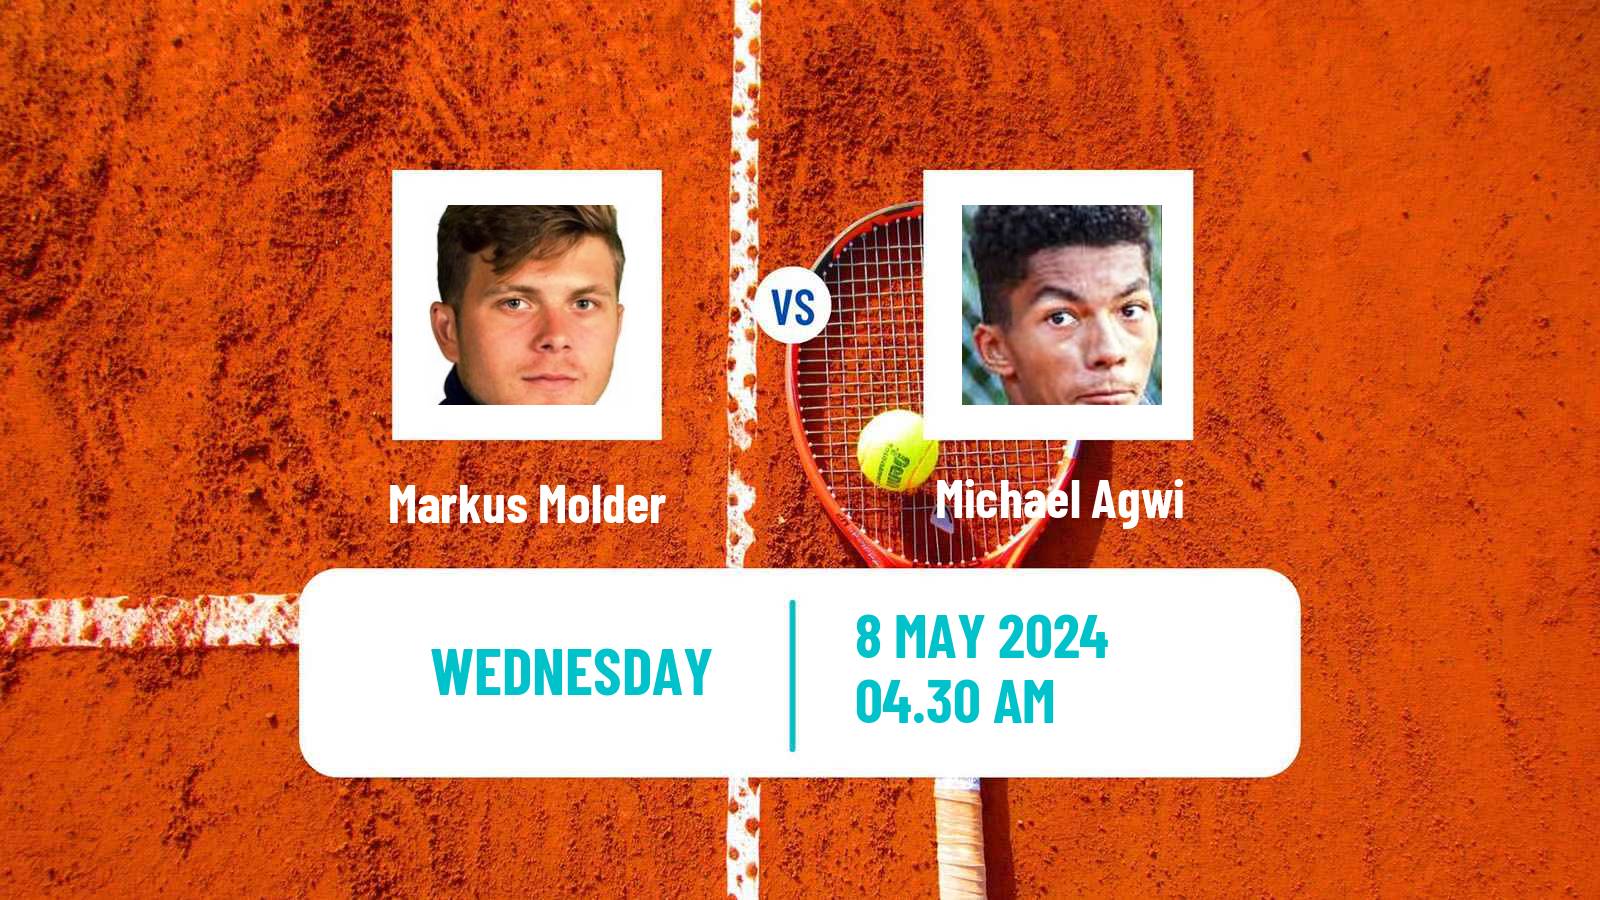 Tennis ITF M15 Antalya 14 Men Markus Molder - Michael Agwi